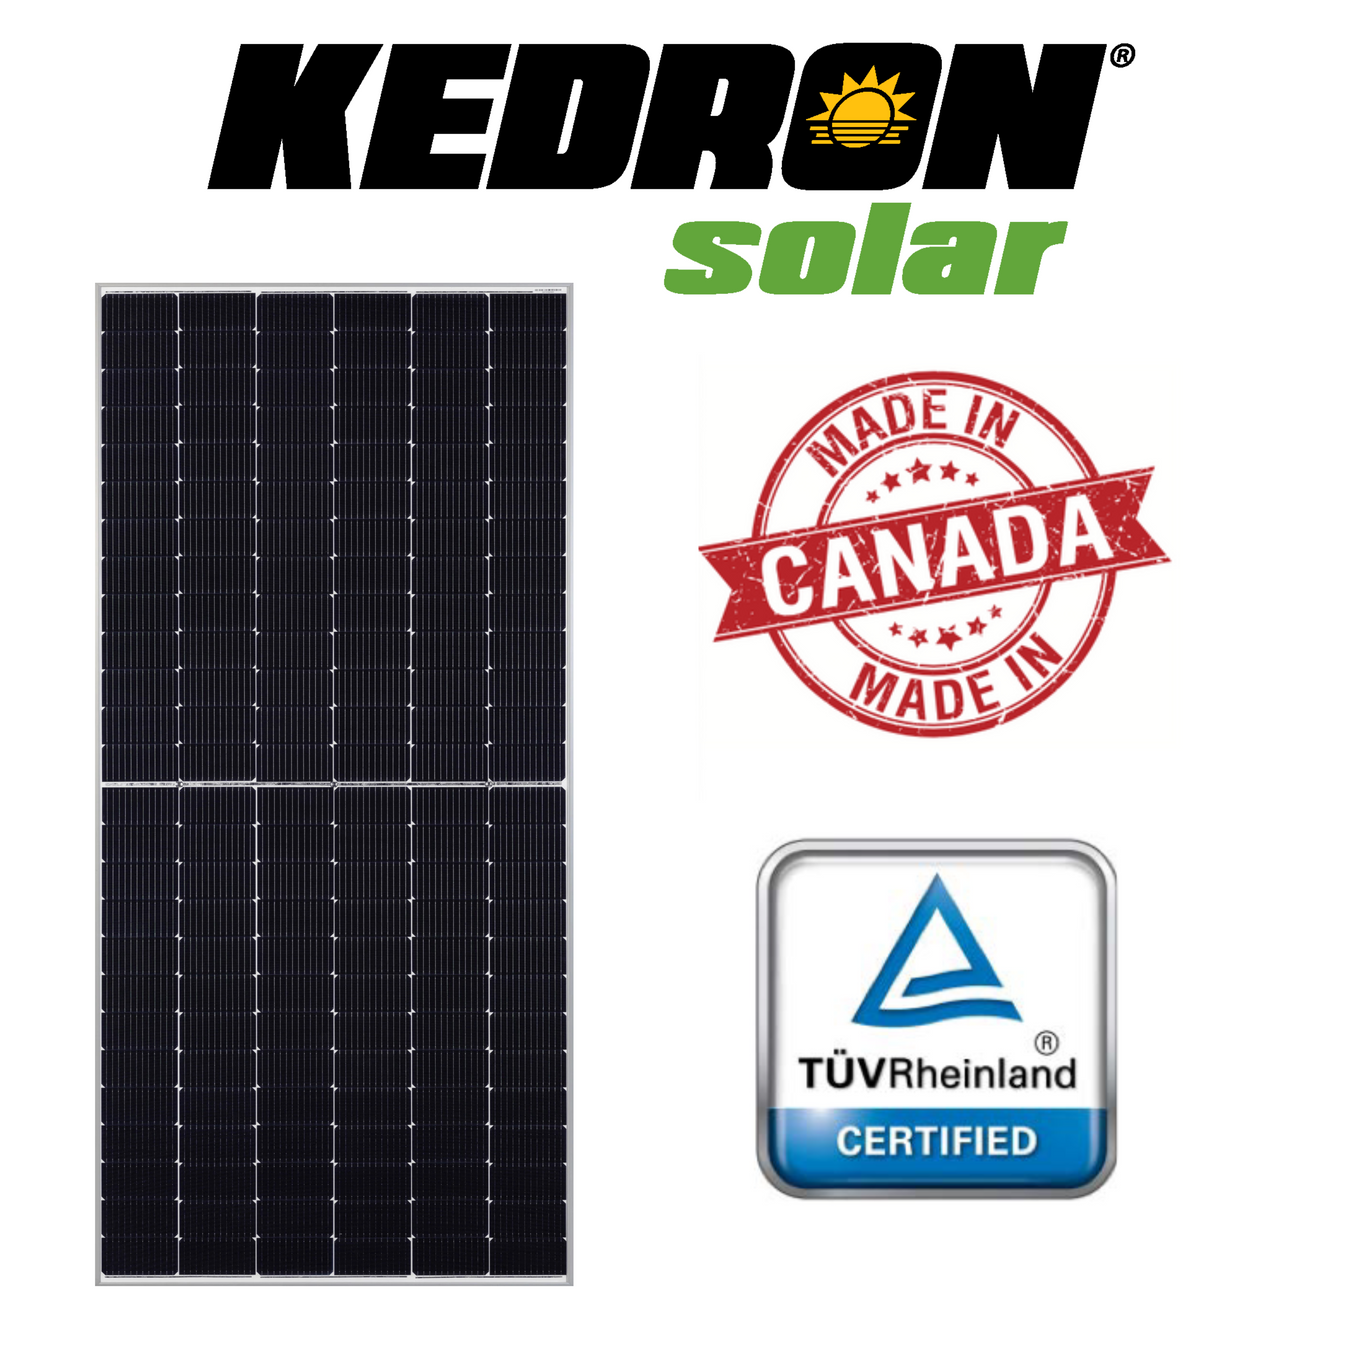 Kedron Solar 550W Mono Solar Panel Canada - MADE IN CANADA!